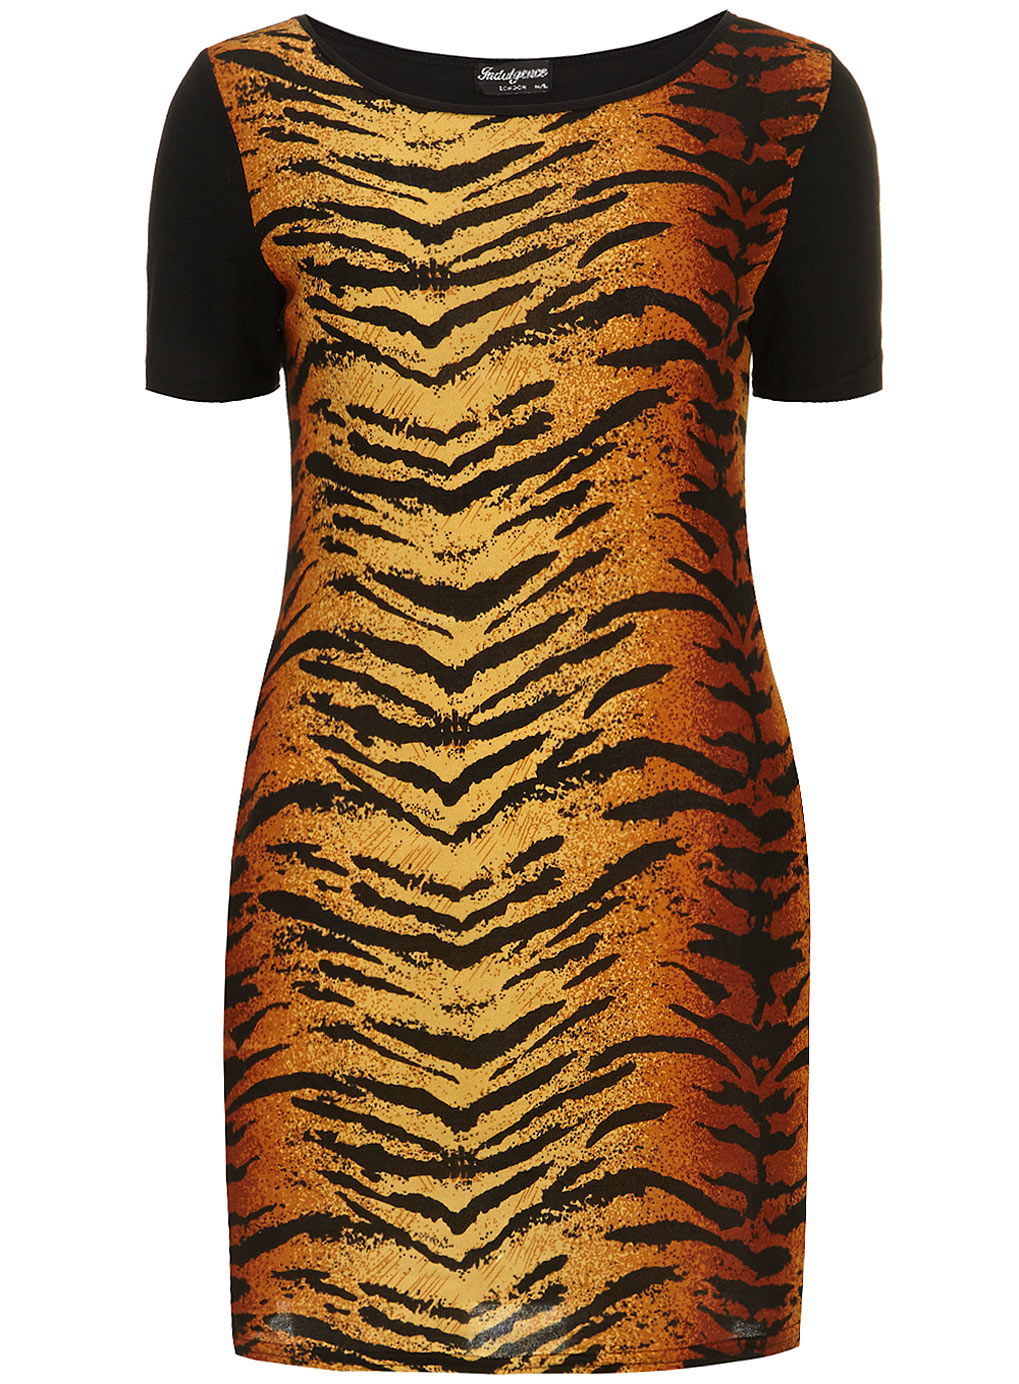 Black tiger T-shirt dress 61460169